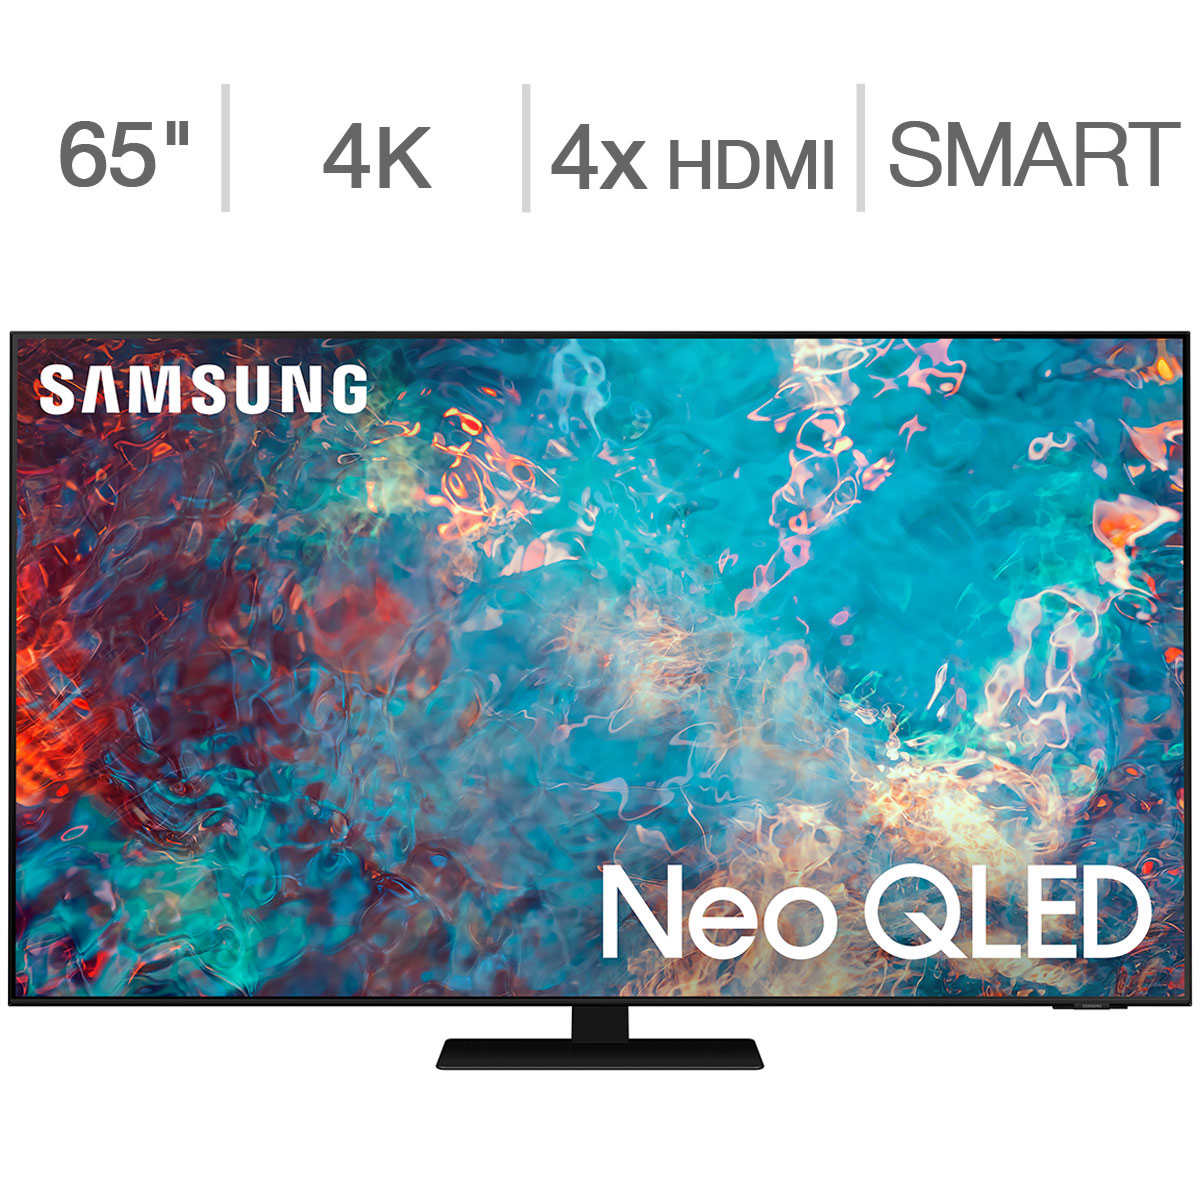 YMMV - 65" Samsung QN85 Series - 4K UHD Neo QLED LCD TV w/ 5 years warranty $700 B&M at Costco